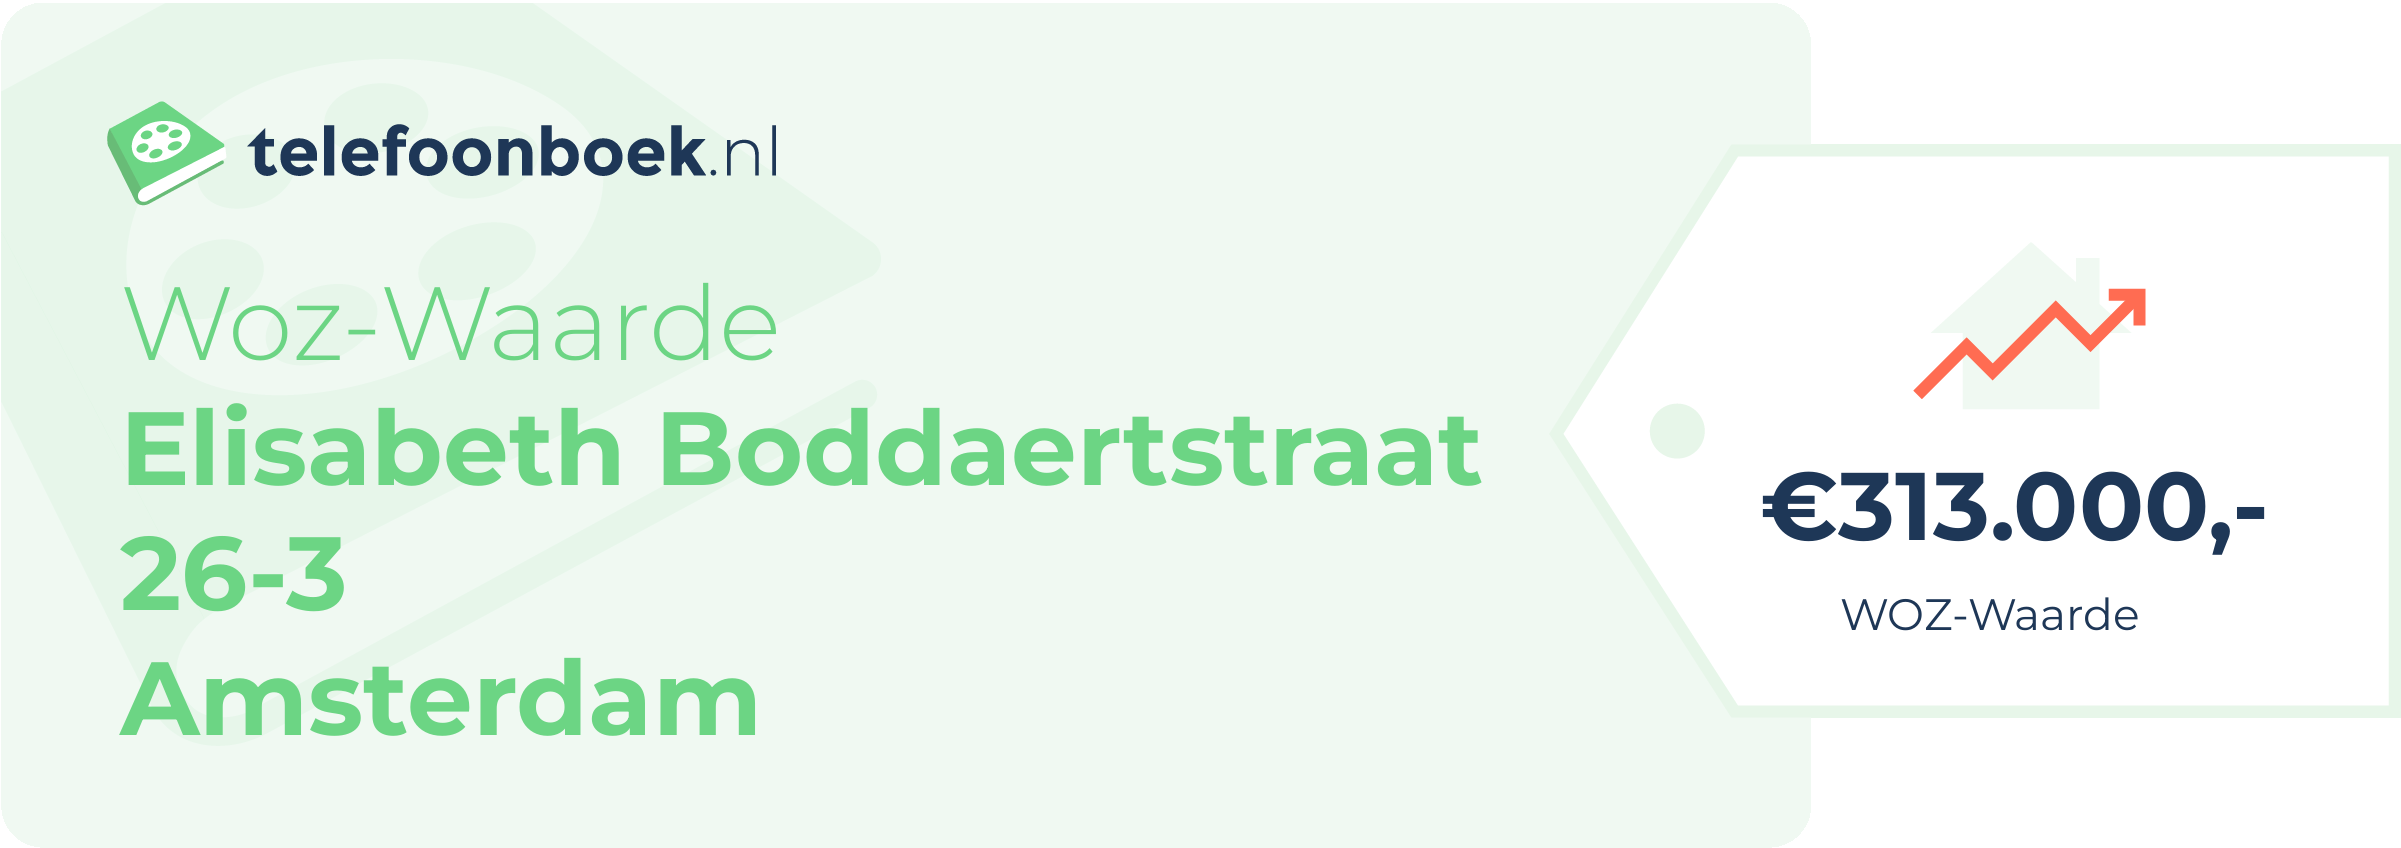 WOZ-waarde Elisabeth Boddaertstraat 26-3 Amsterdam